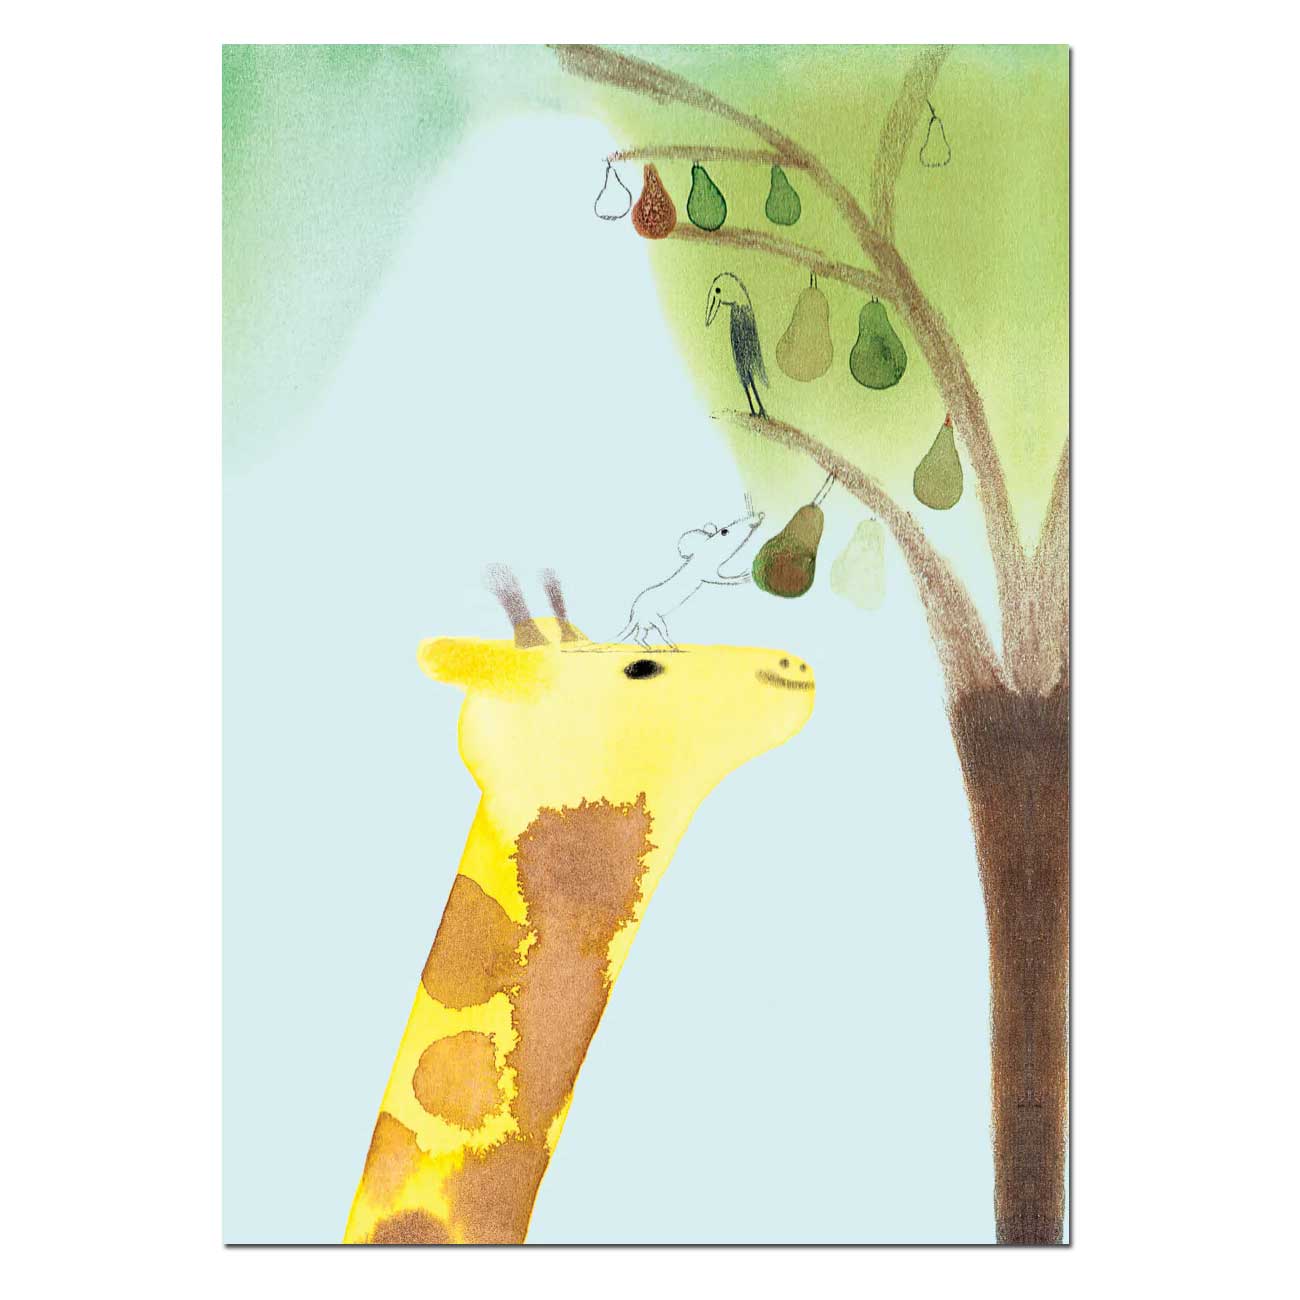 Roger la Borde Doppelkarte "Wilderness" Giraffe und Maus, Freundschaft